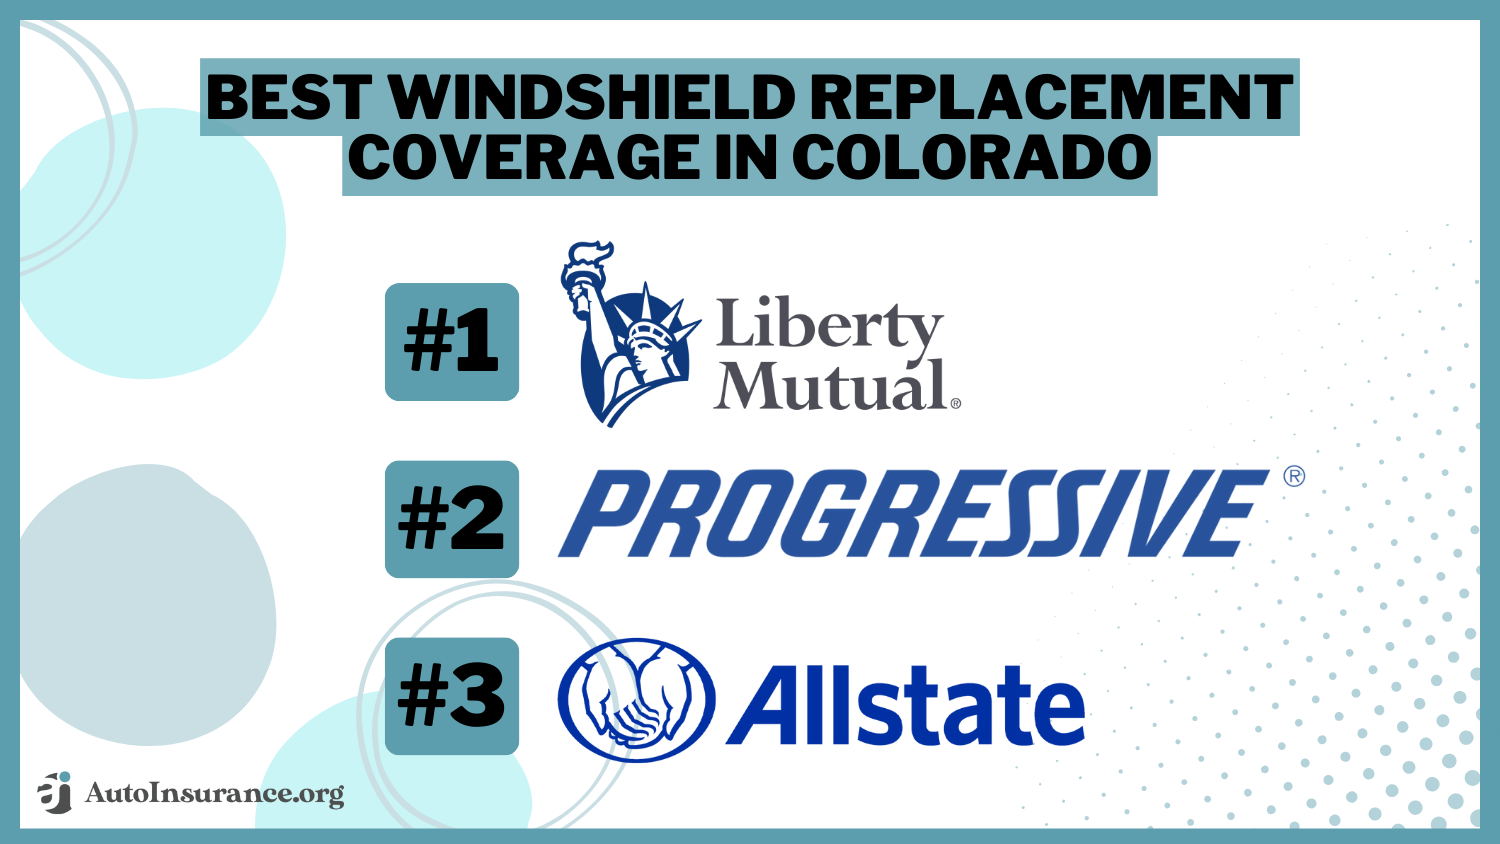 Best Windshield Replacement Coverage in Colorado: Liberty Mutual, Progressive, Allstate